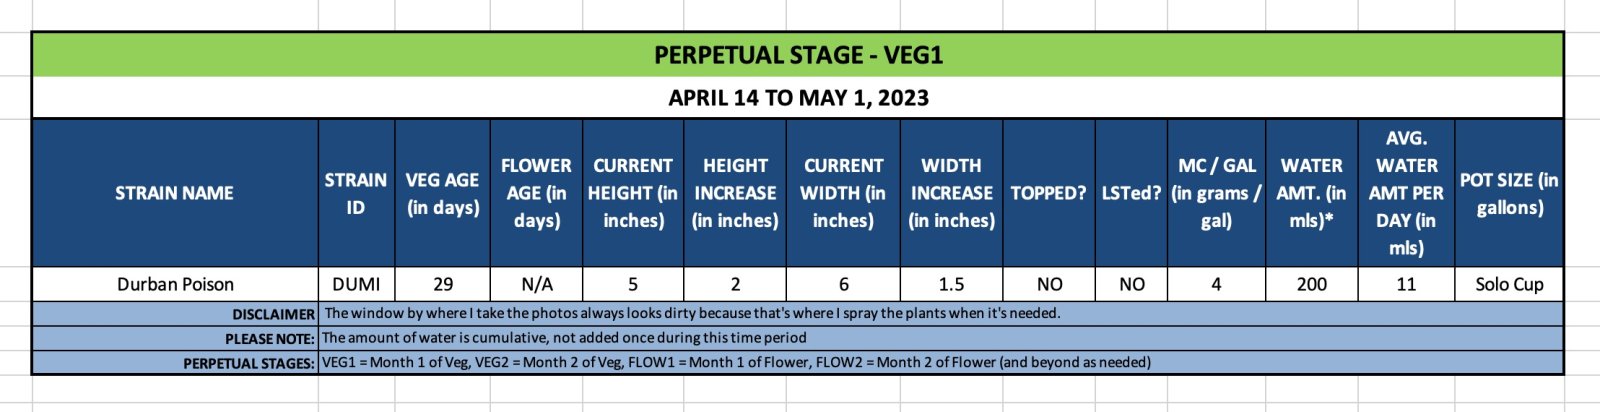 VEG1 (Dumi) - April 14 to May 1, 2023.jpg